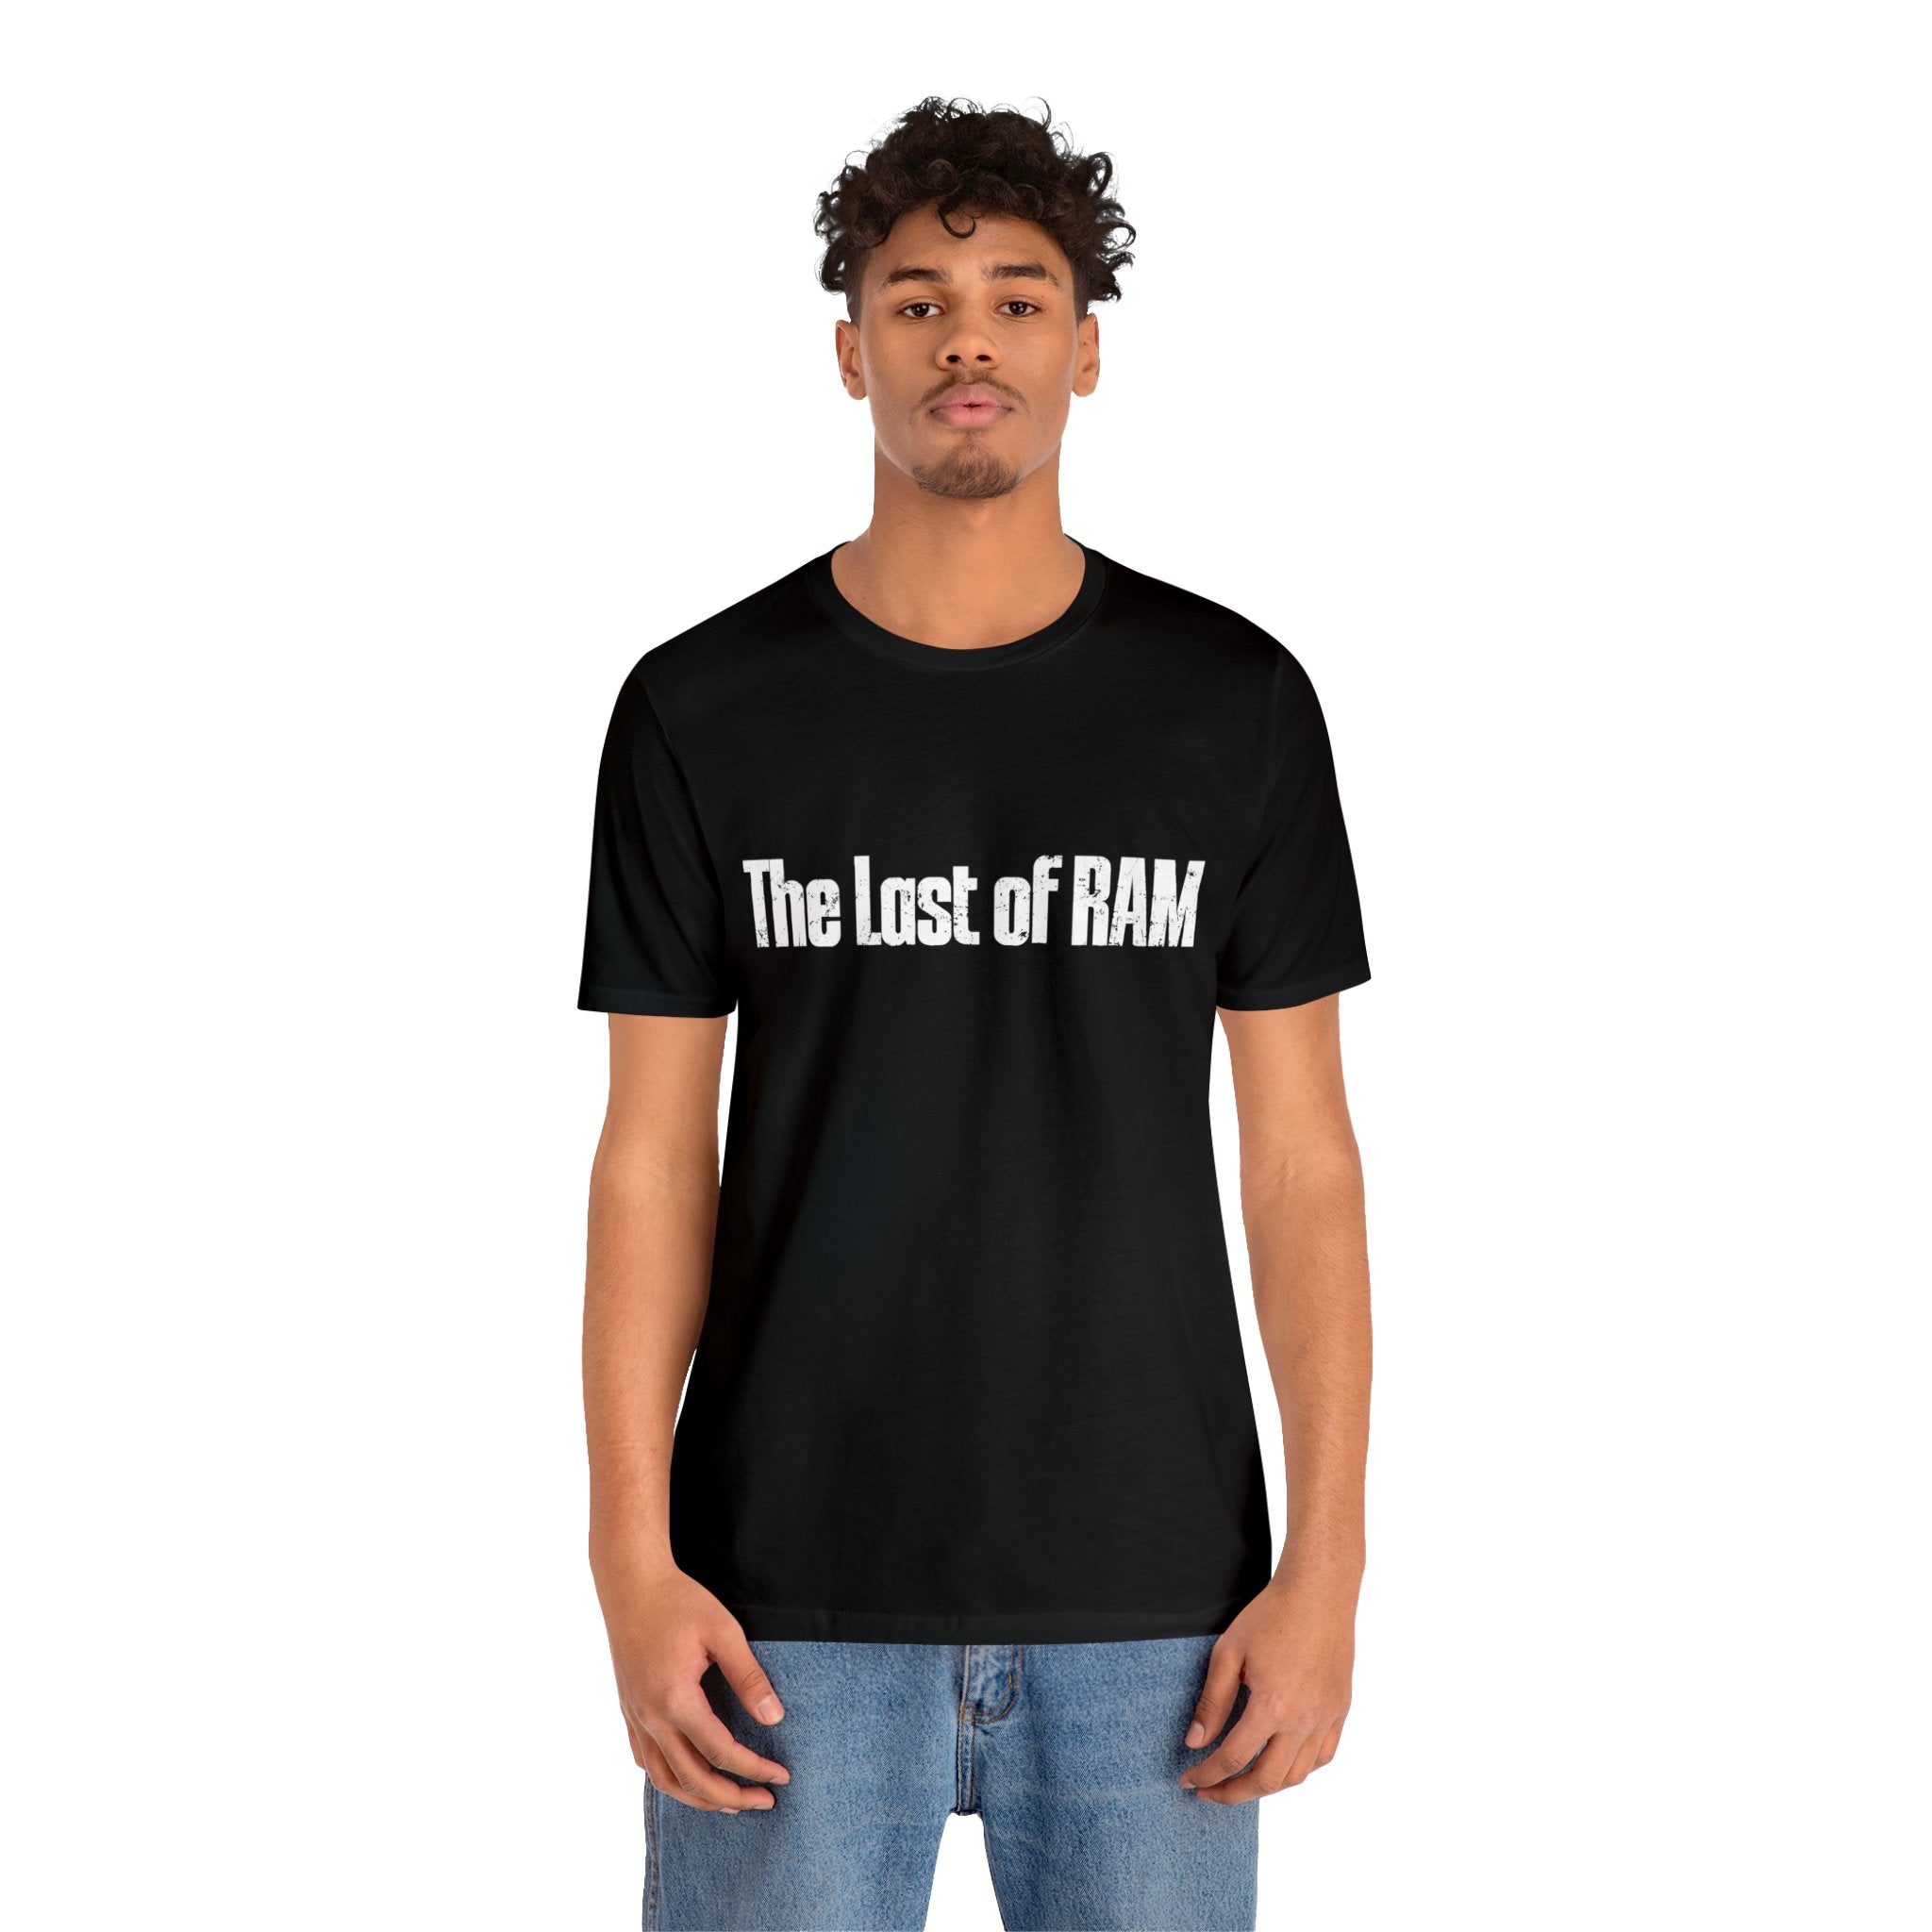 The Last of RAM Tee Shirt